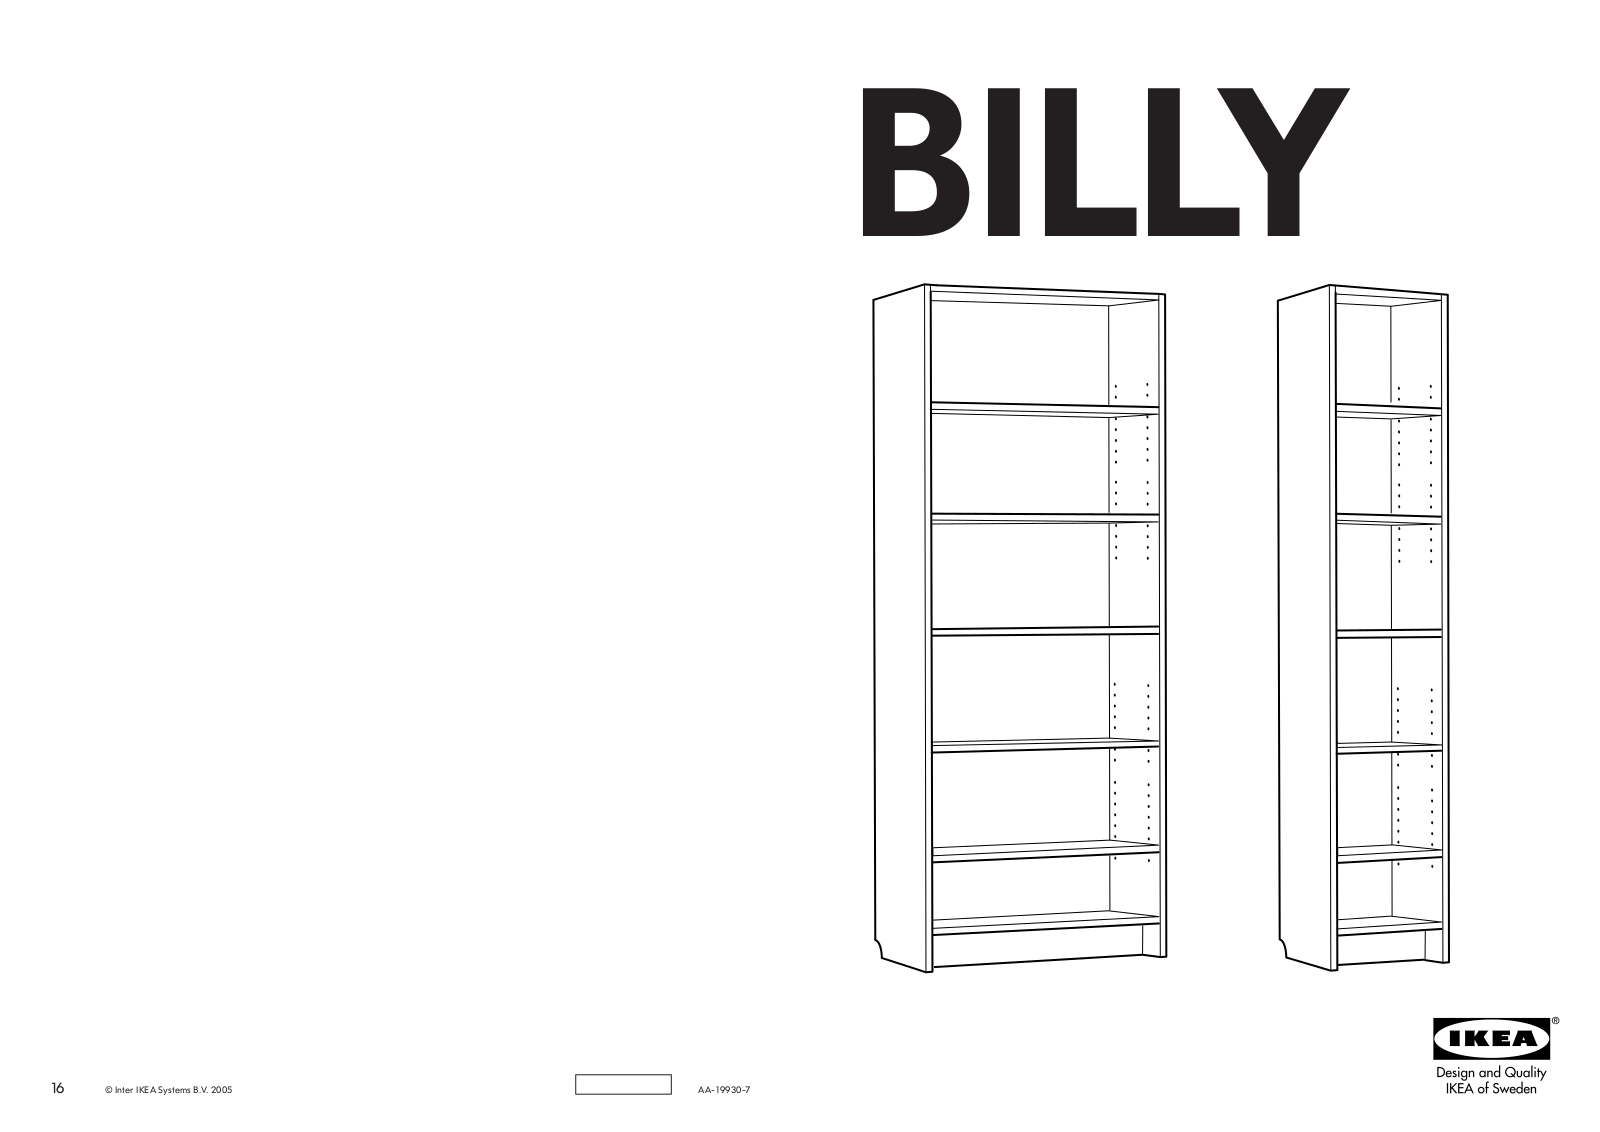 IKEA BILLY 40-80-202 User Manual